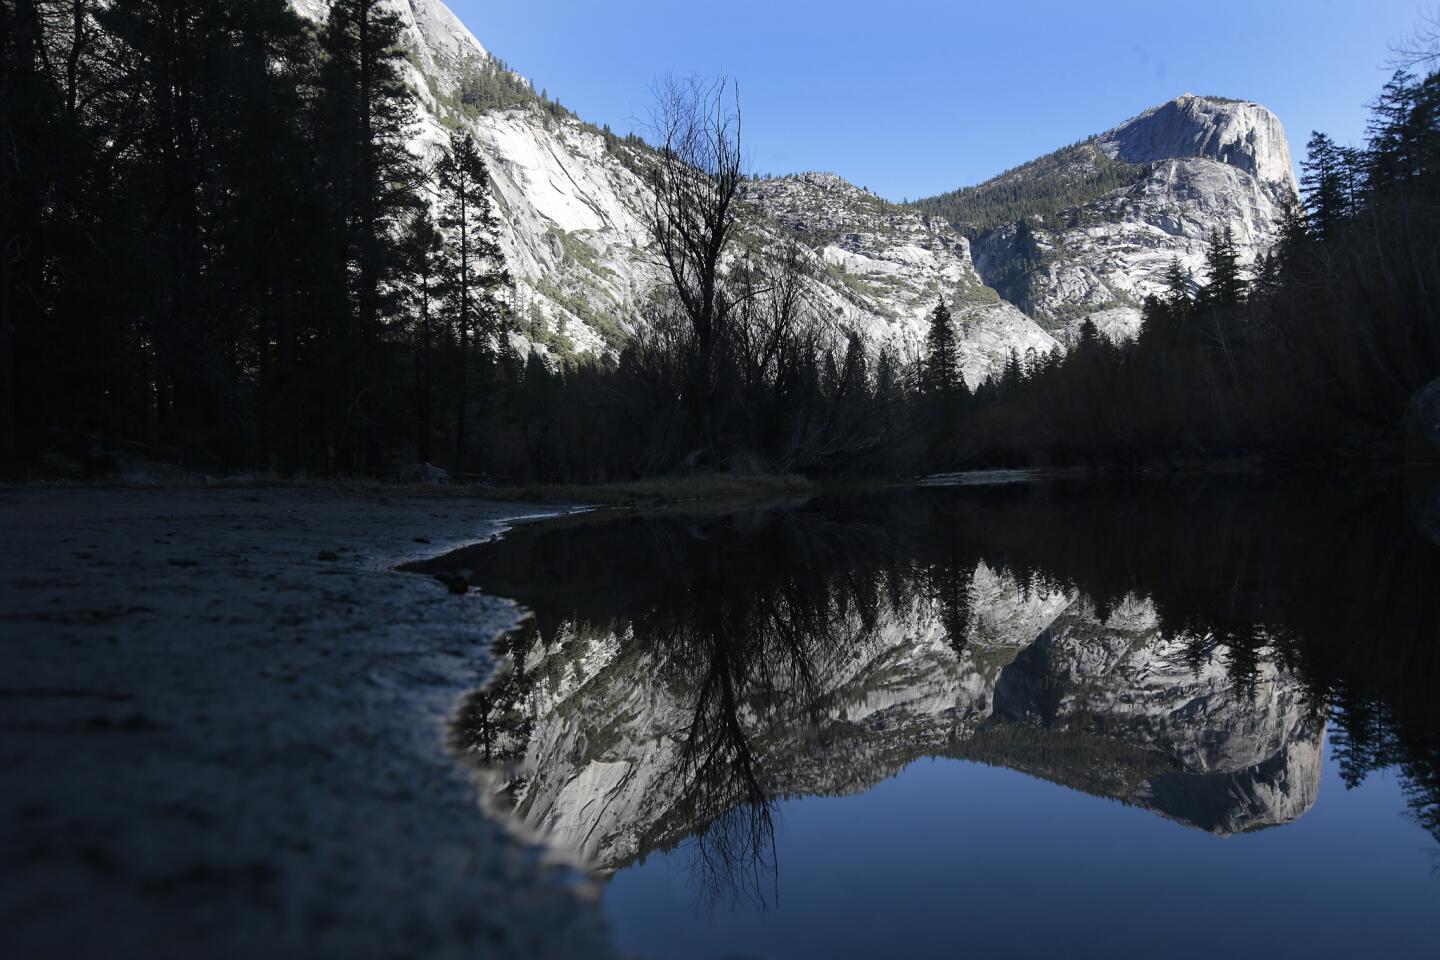 Dryer season expected in Yosemite